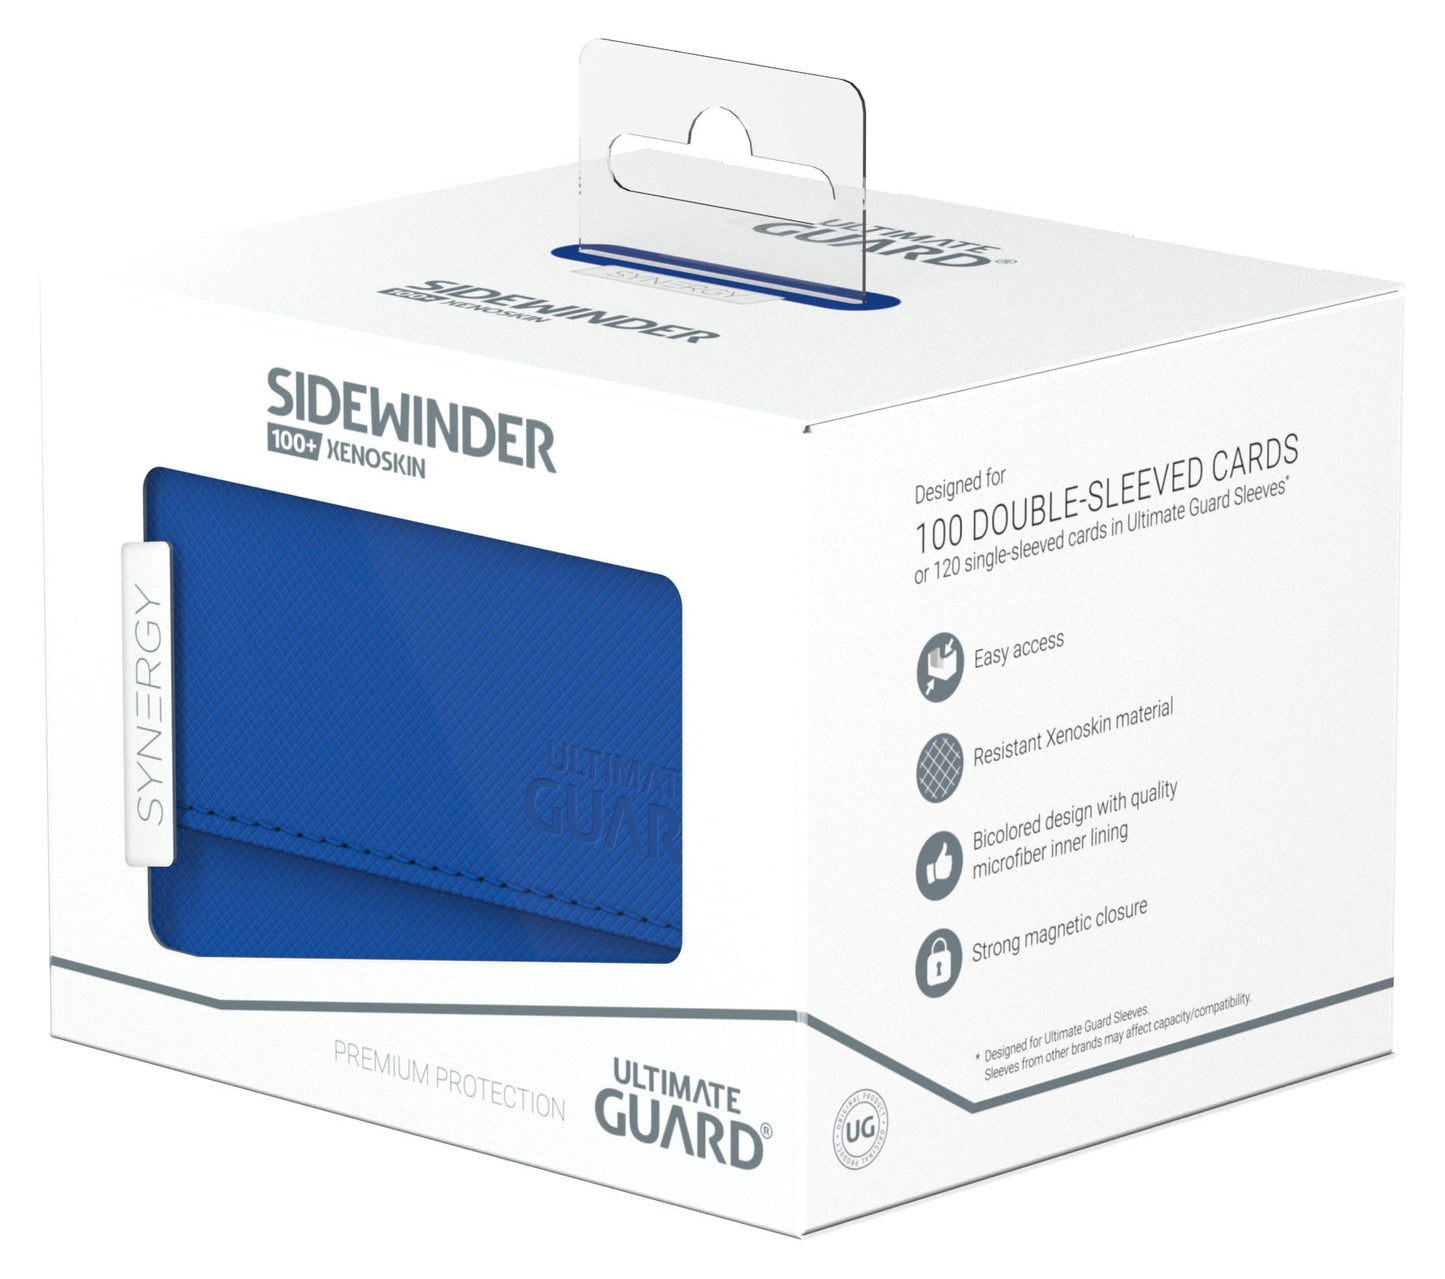 Ultimate Guard - Sidewinder Synergy 100+ Deck Box - XenoSkin